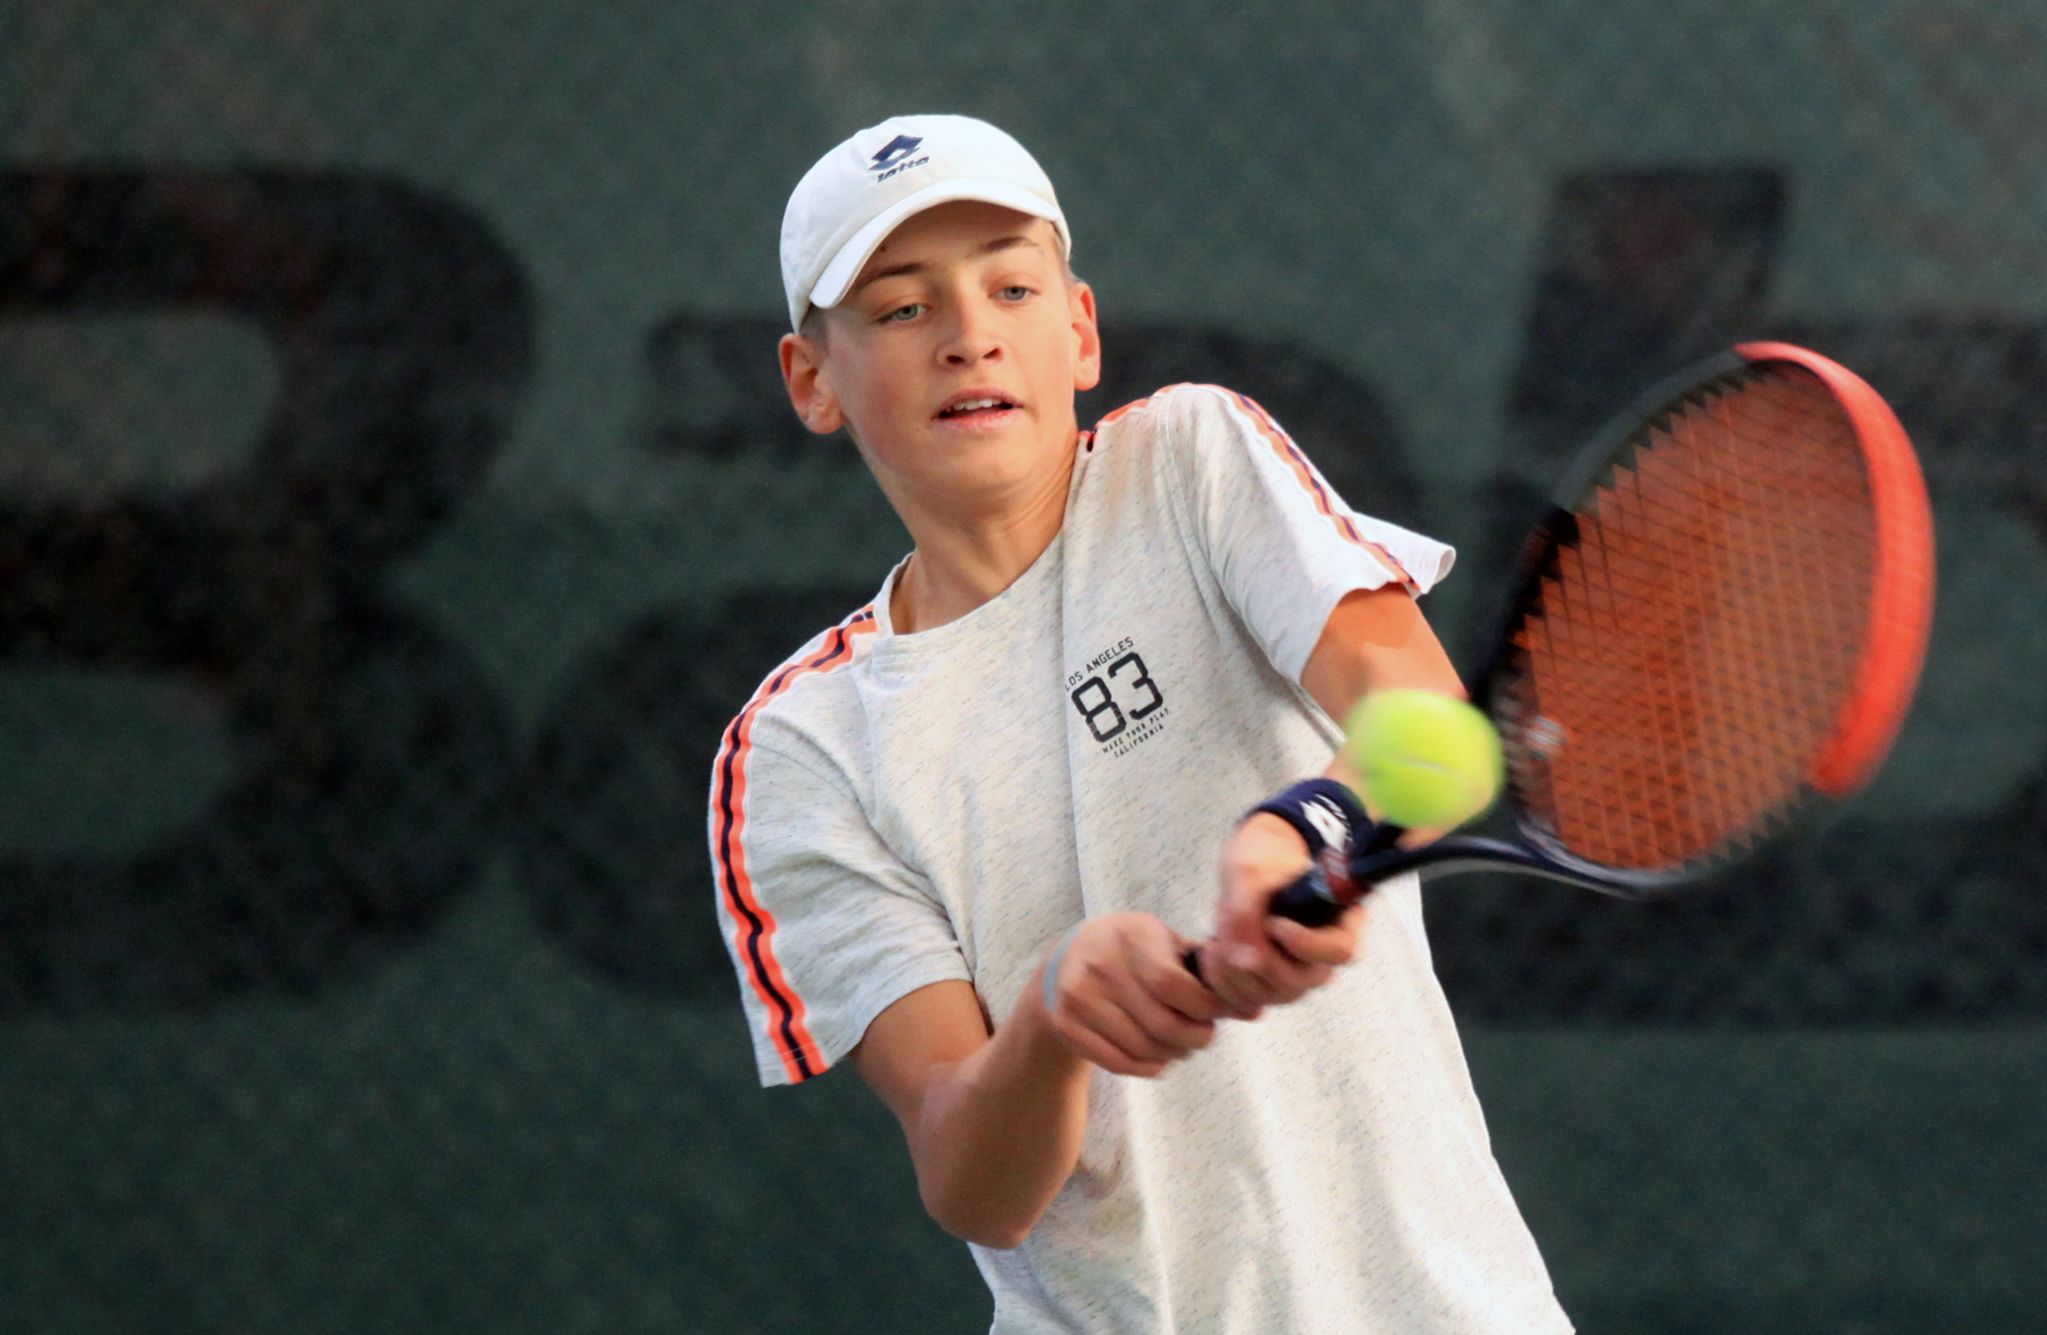 Rafael Behr do završnice Tennis Europe turnira u Zenici, dva hrvatska naslova u paru